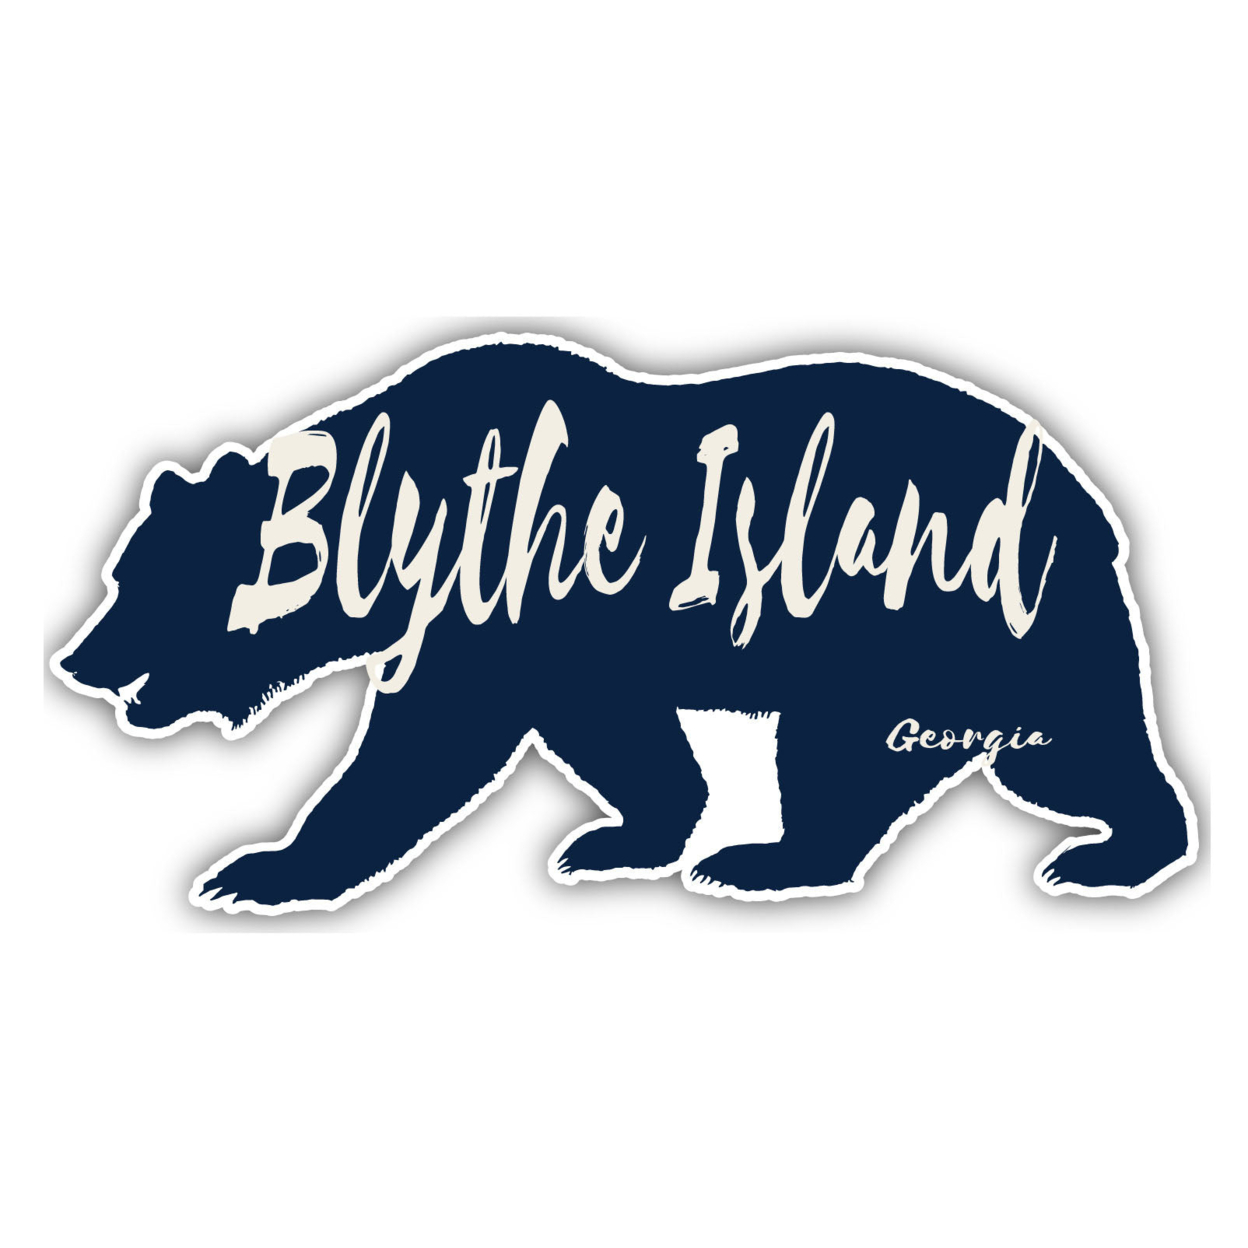 Blythe Island Georgia Souvenir Decorative Stickers (Choose Theme And Size) - Single Unit, 10-Inch, Camp Life